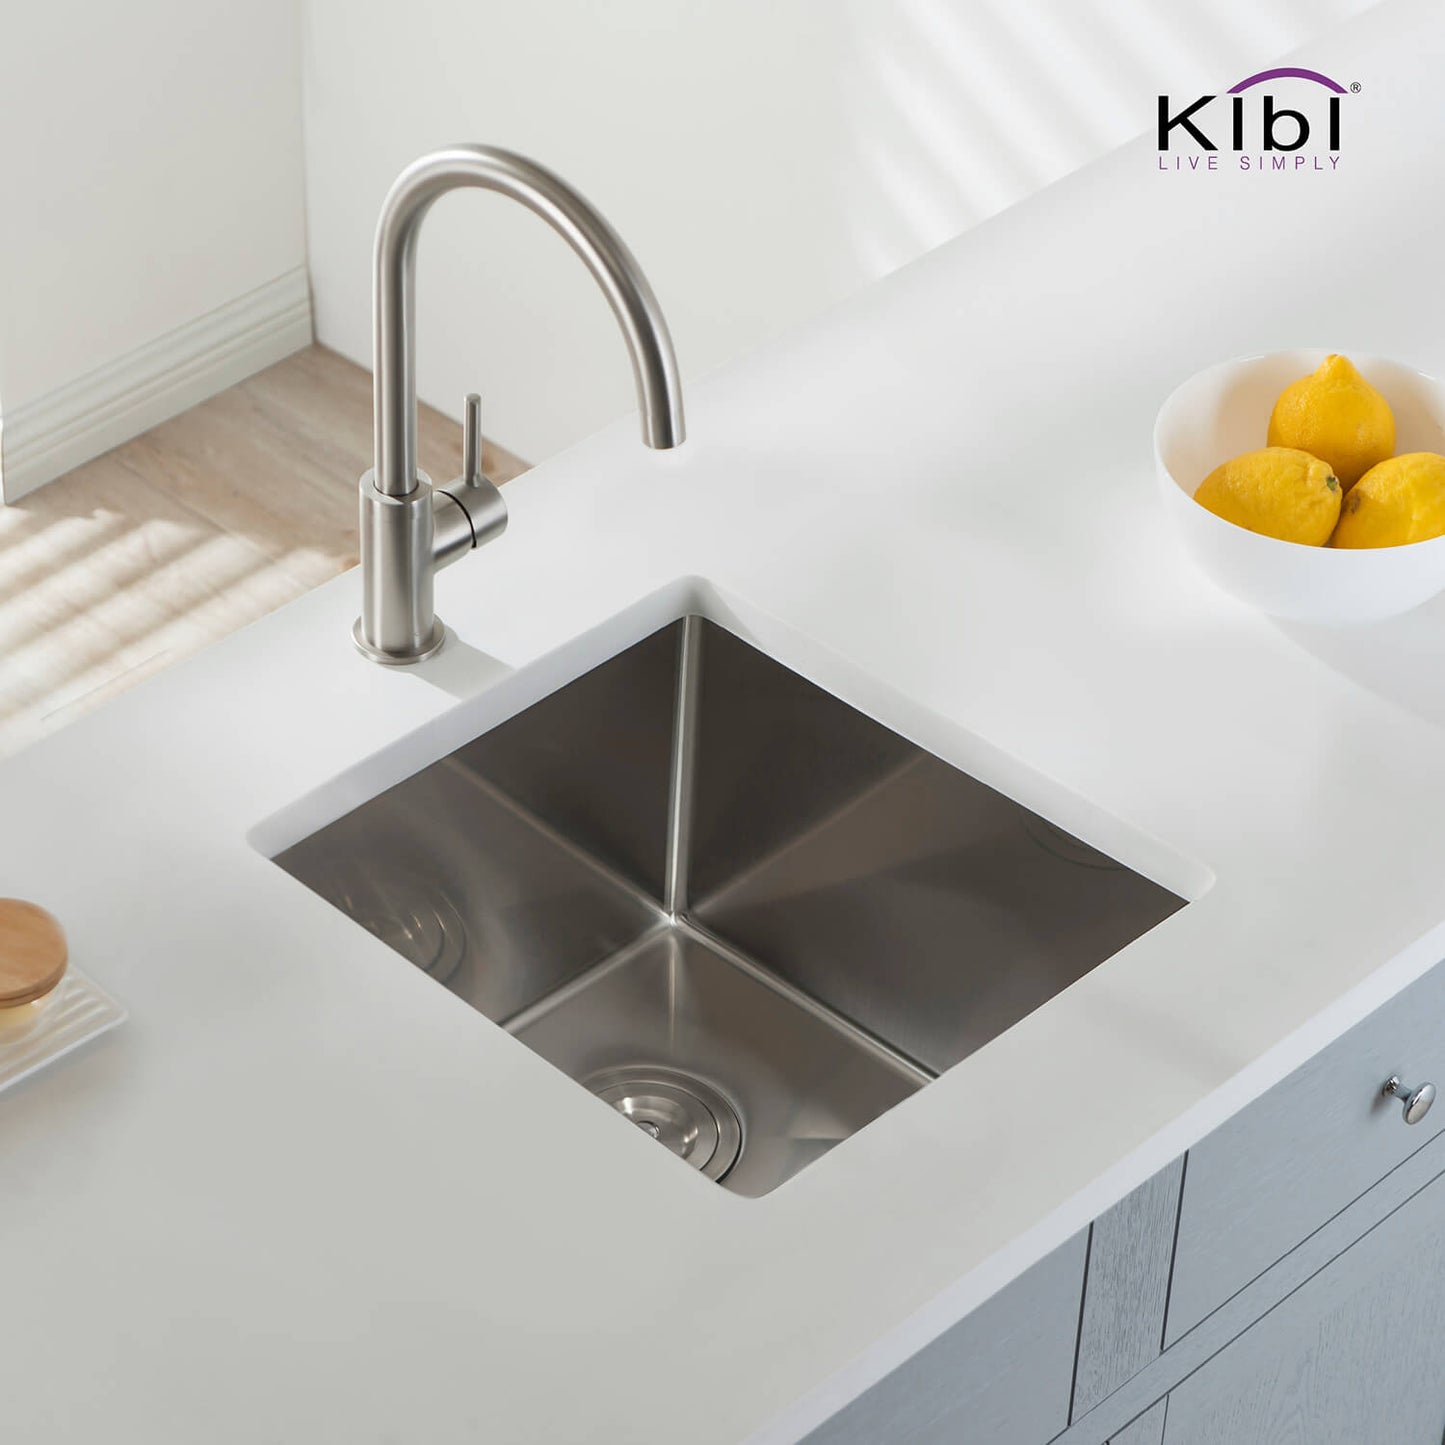 Kibi 16" x 16" x 8" Handcrafted Undermount Single Bowl Kitchen Sink With Satin Finish